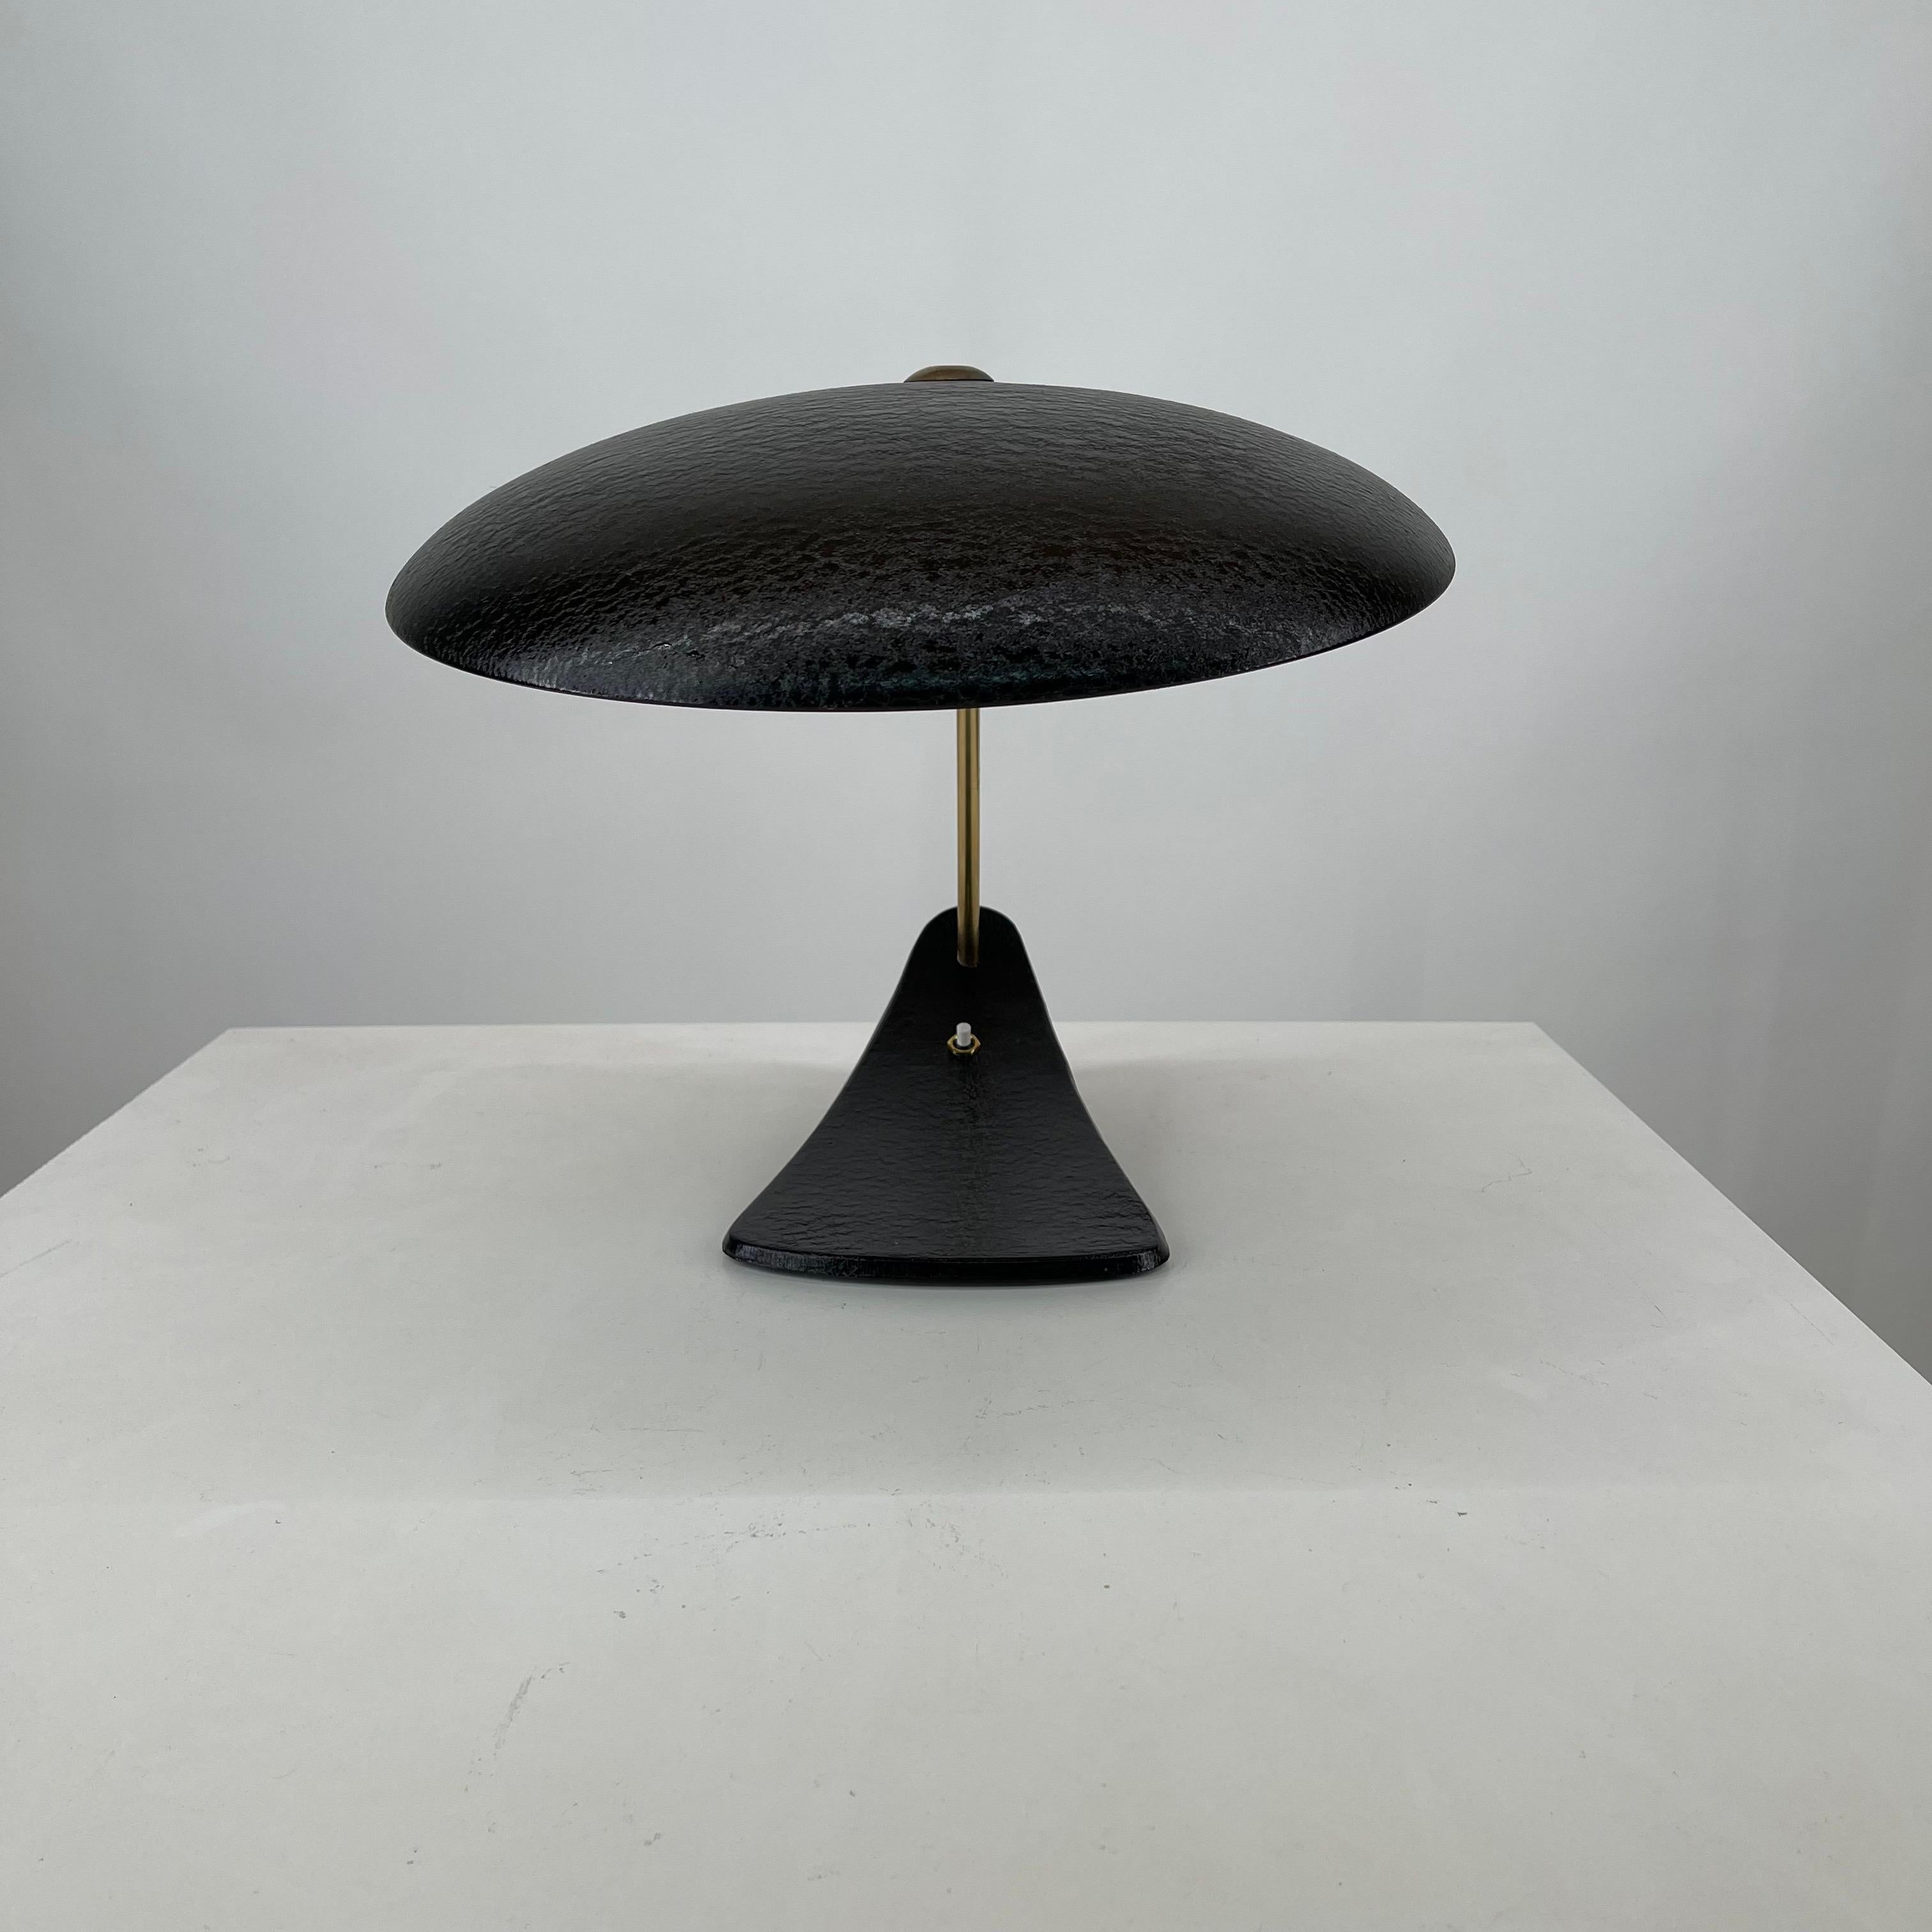 Stilnovo table lamp, Italy, 1950s.